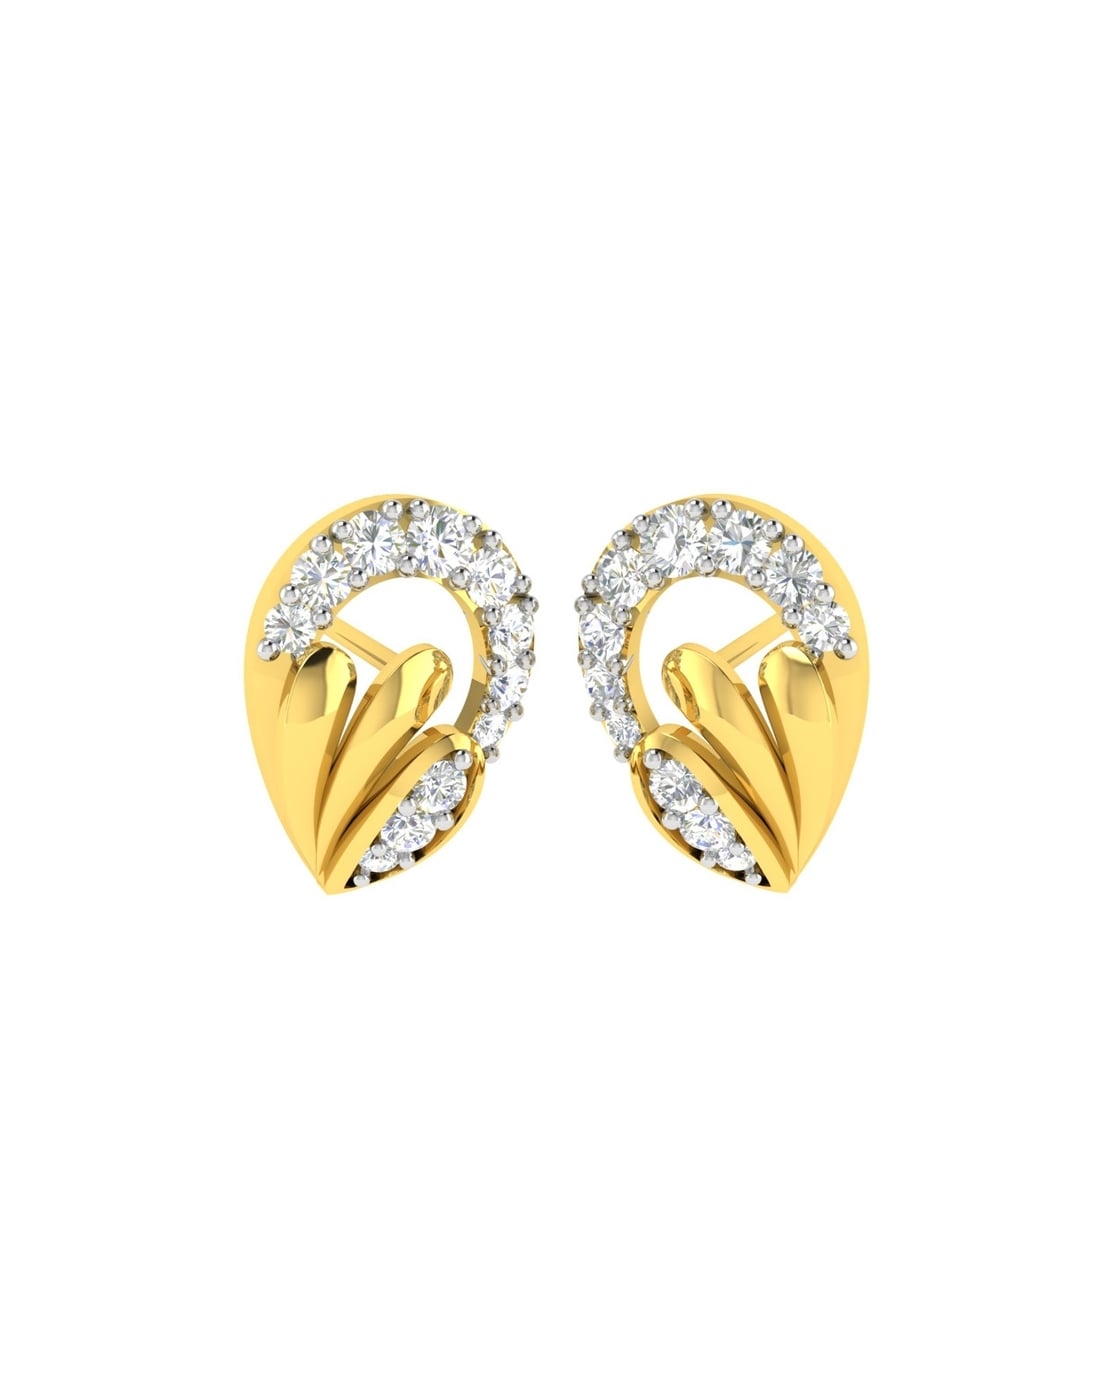 Matte finish real kemp-white stone earrings dj-41566 – dreamjwell